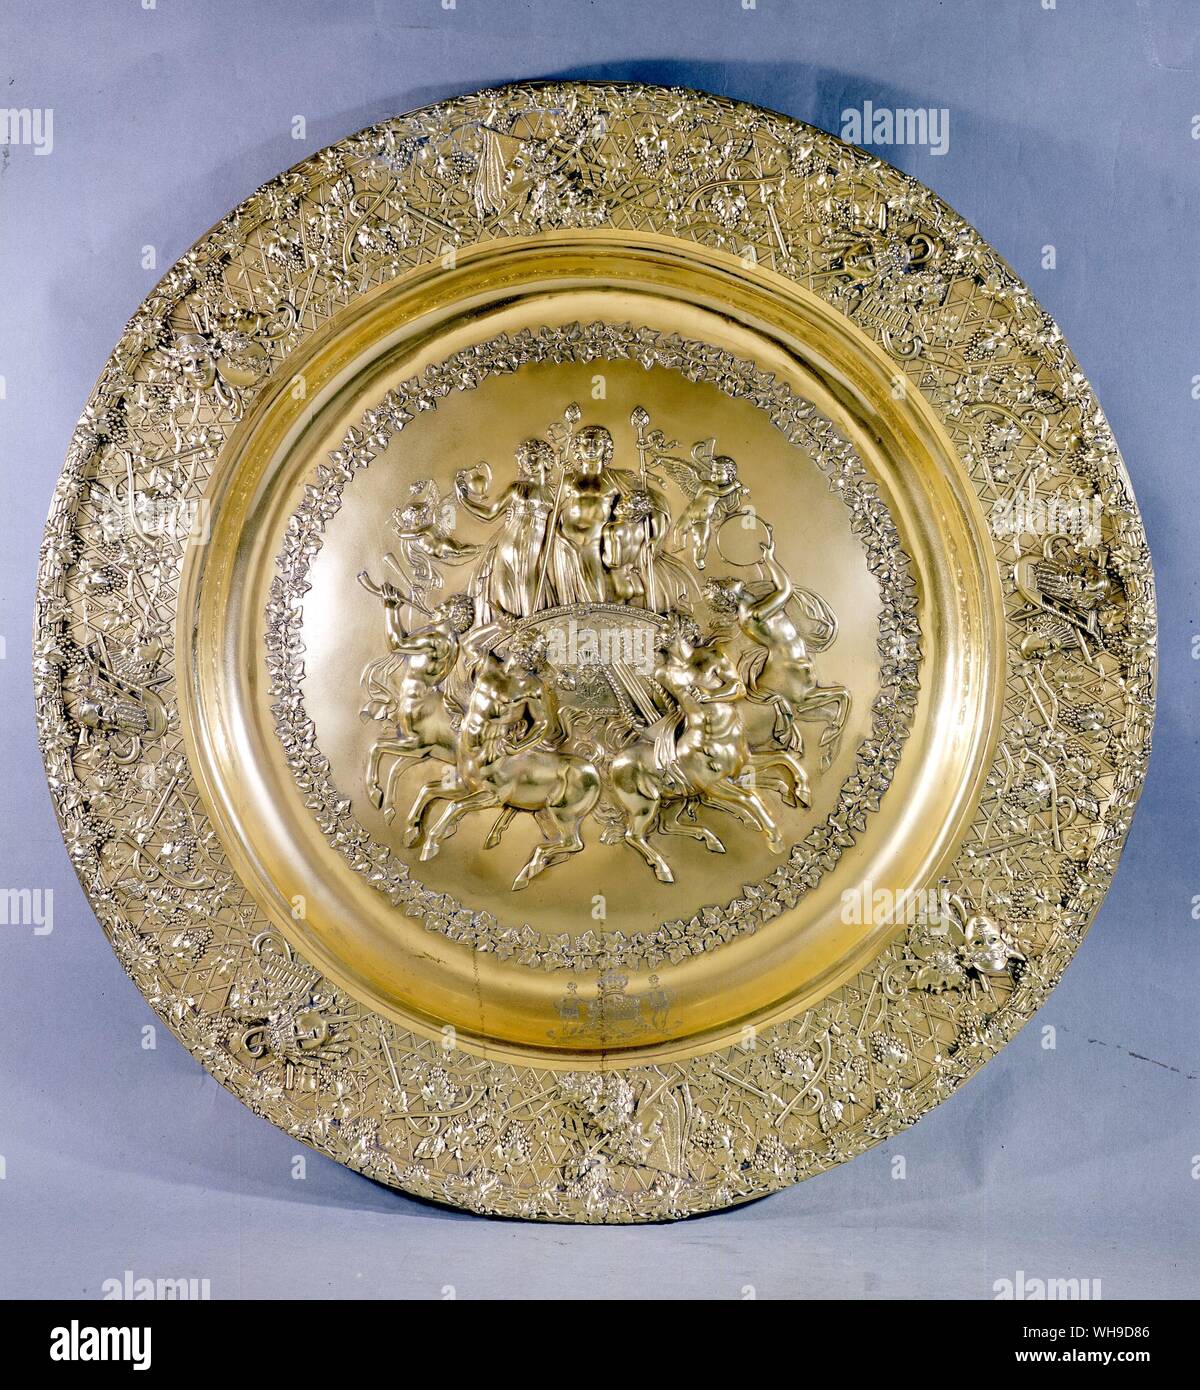 Silver Gilt Plate  1817 Paul Storr Stock Photo